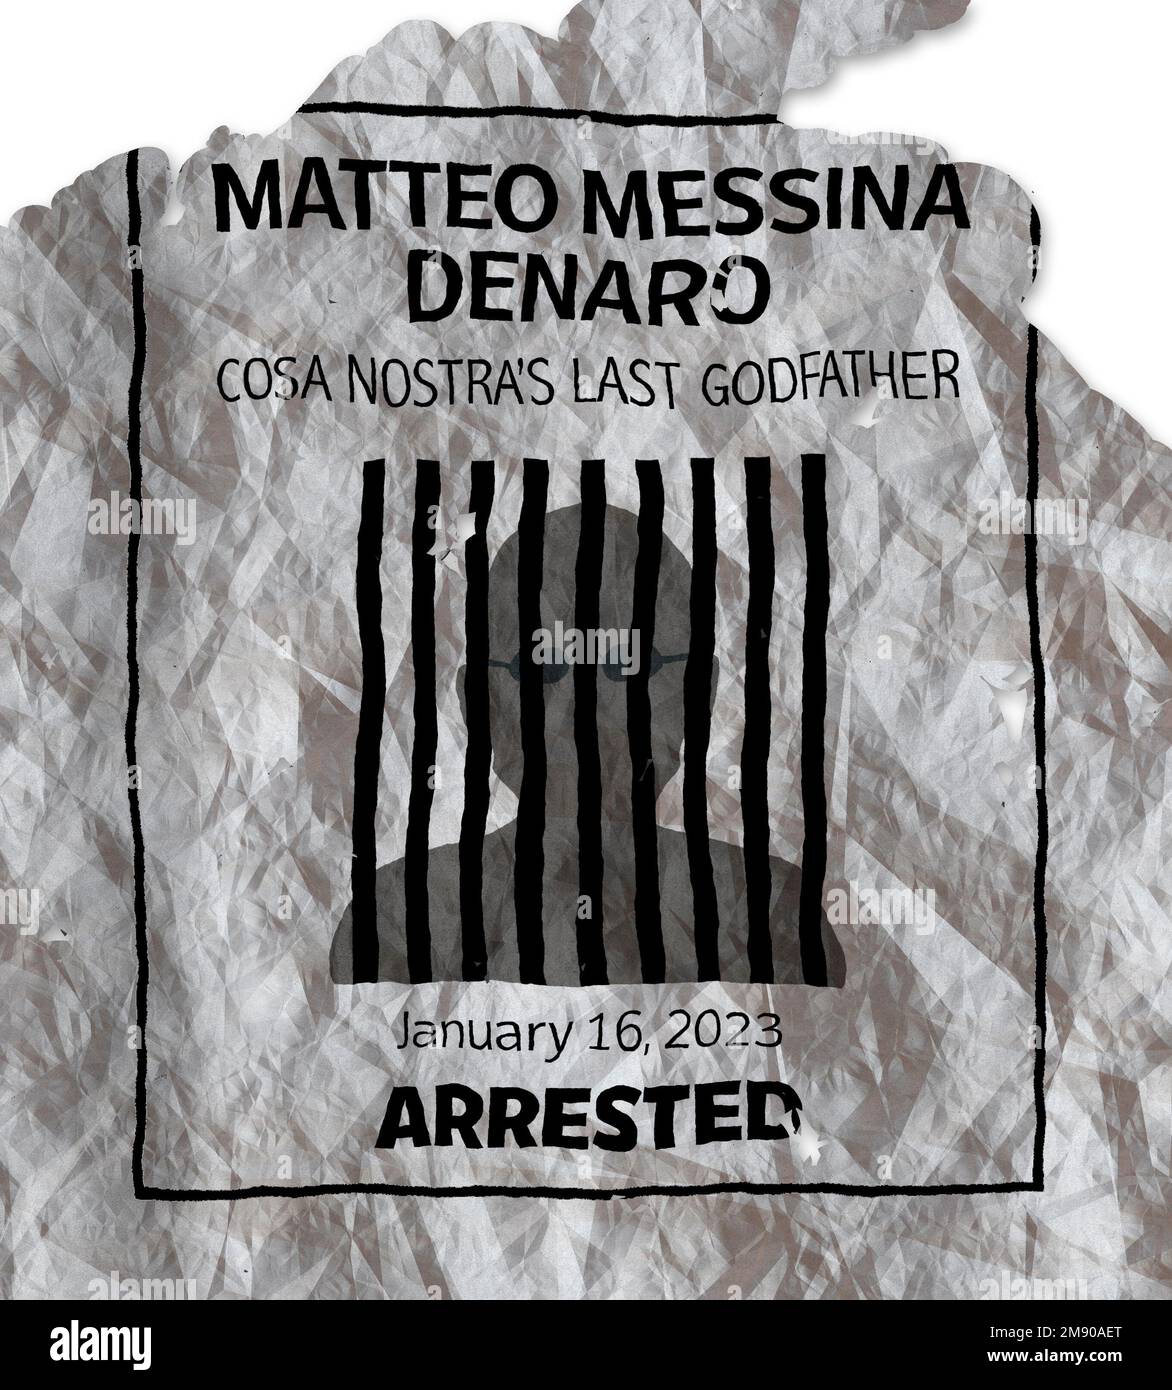 Arrest of super-fugitive Matteo Messina Denaro, mafia, mob, godfather of Cosa Nostra. Boss of bosses. The arrest took place on January 16, 2023 Stock Photo